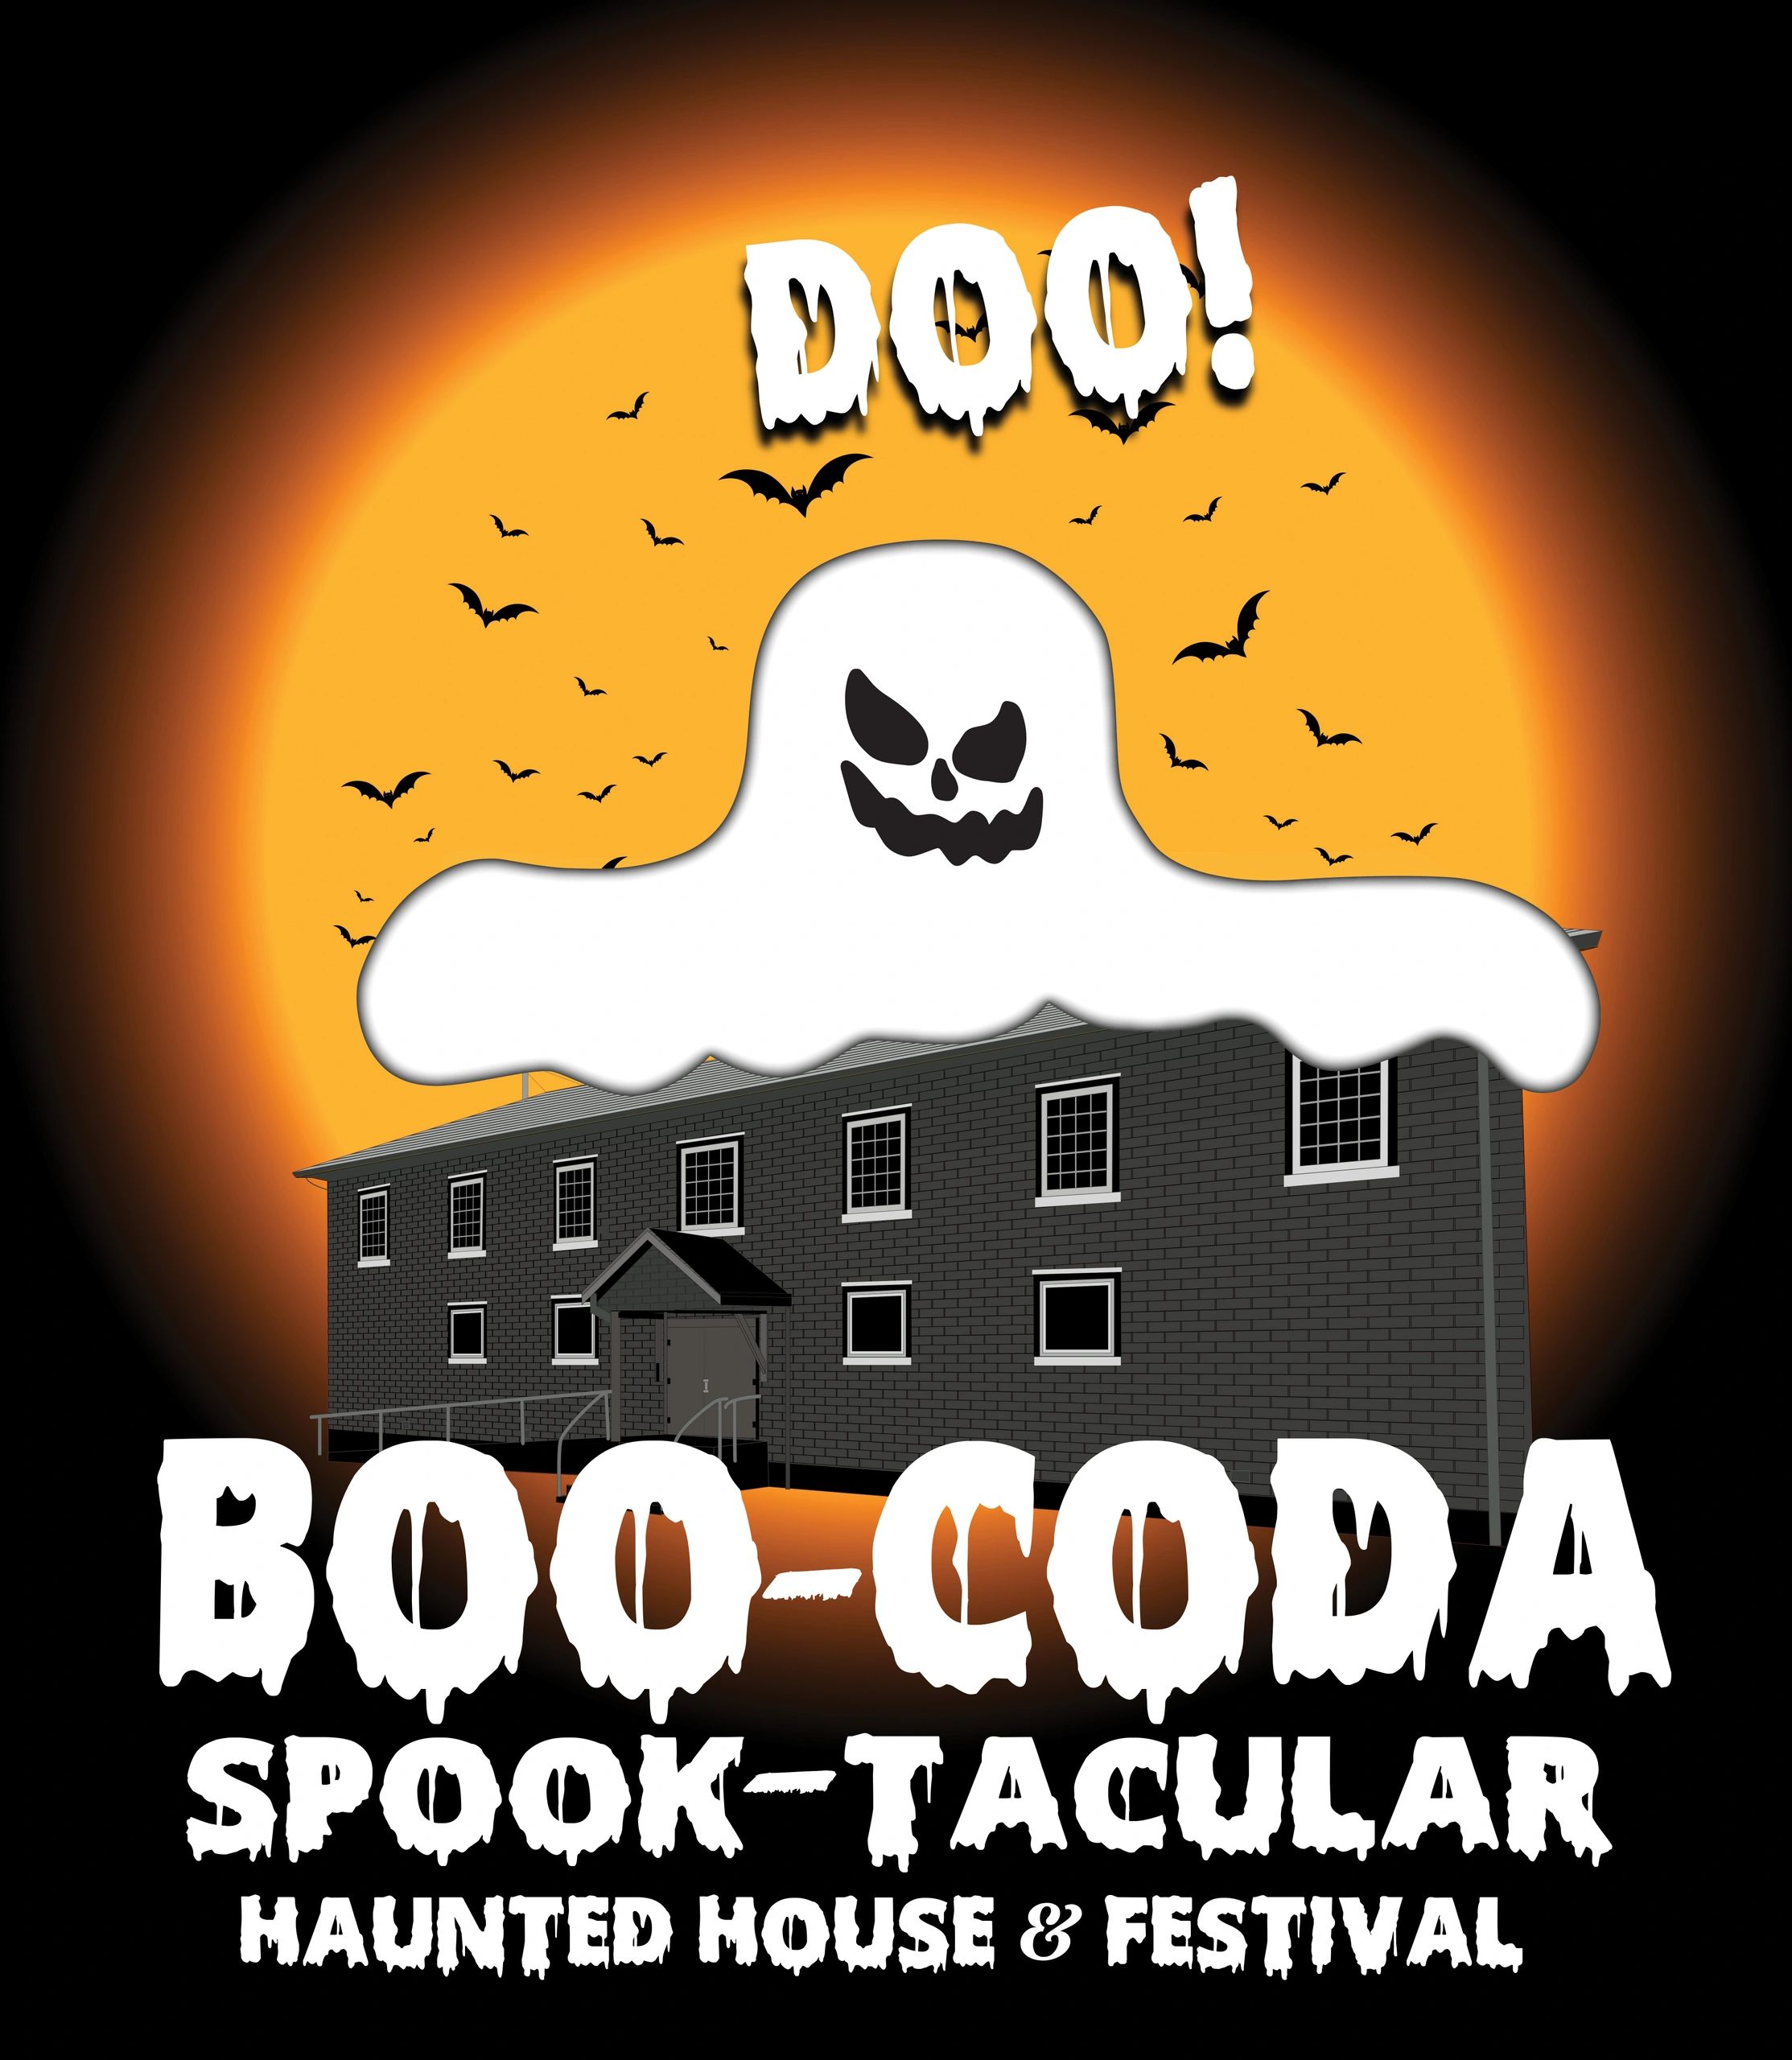 SPOOK-TACULAR - Boo-Coda Spook-Tacular, Haunted House, Event